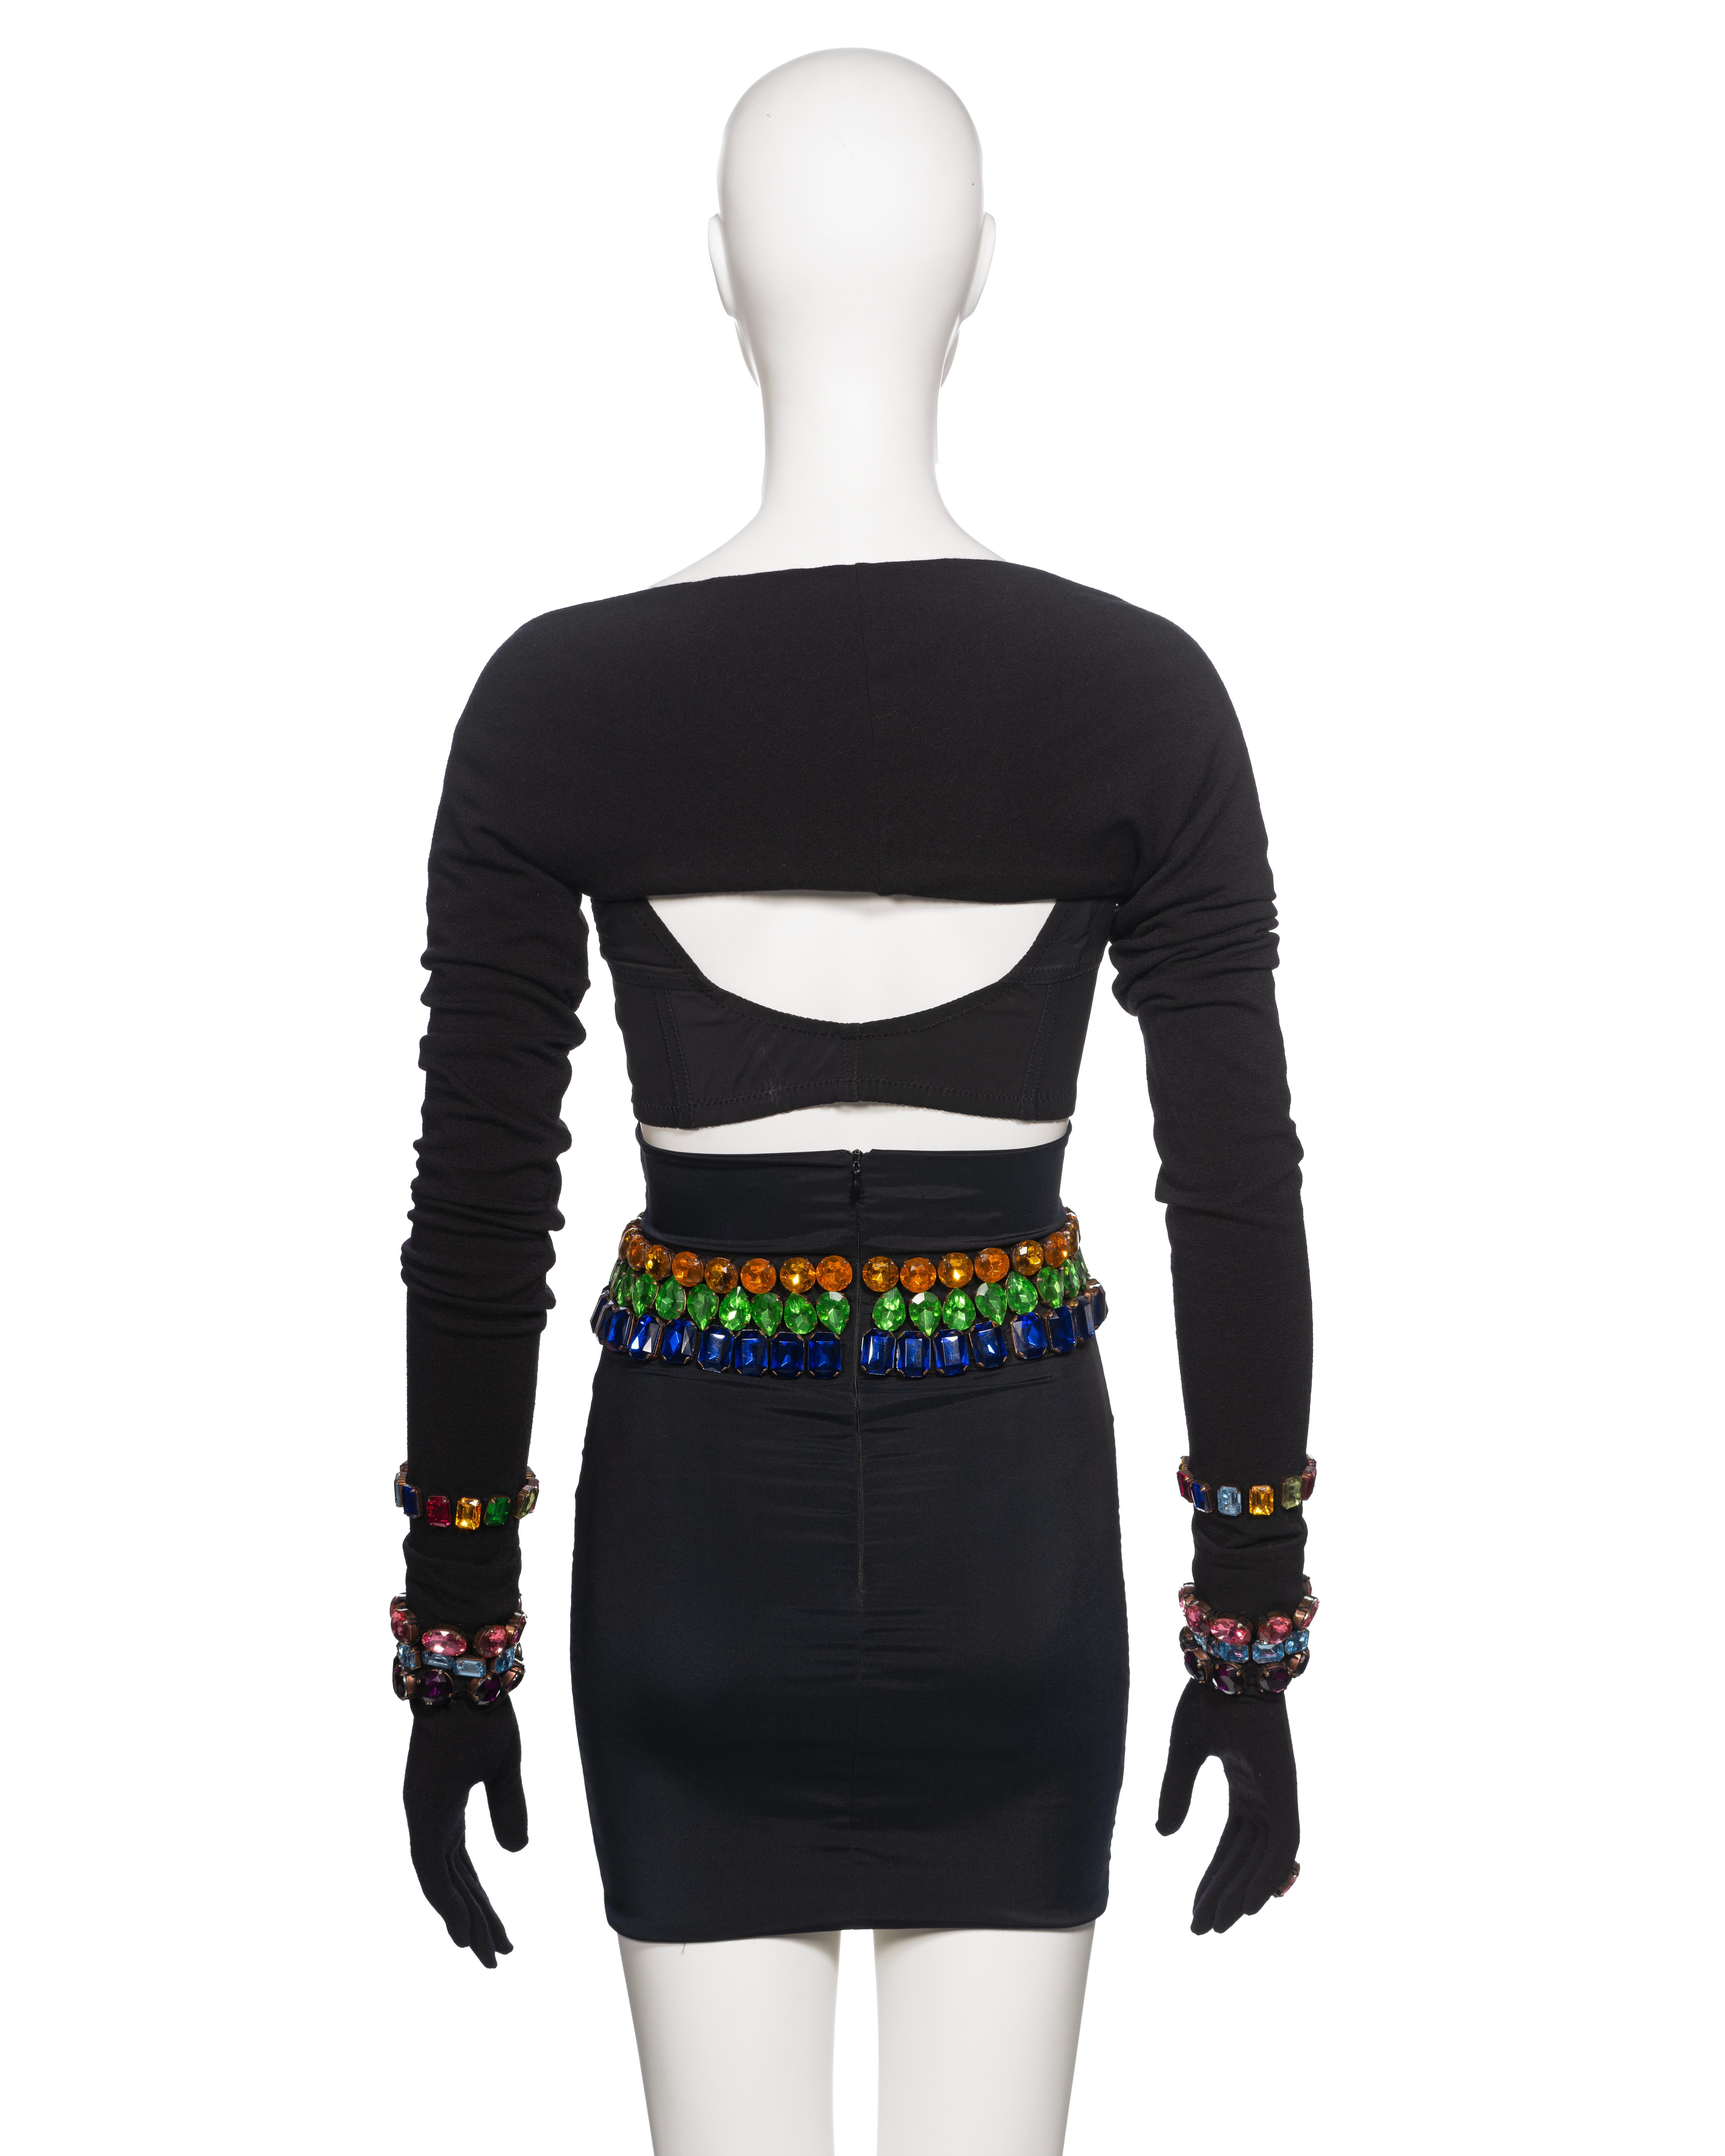 Dolce & Gabbana Black Crystal Adorned Corset, Skirt, Shrug and Gloves, FW 1991 For Sale 5